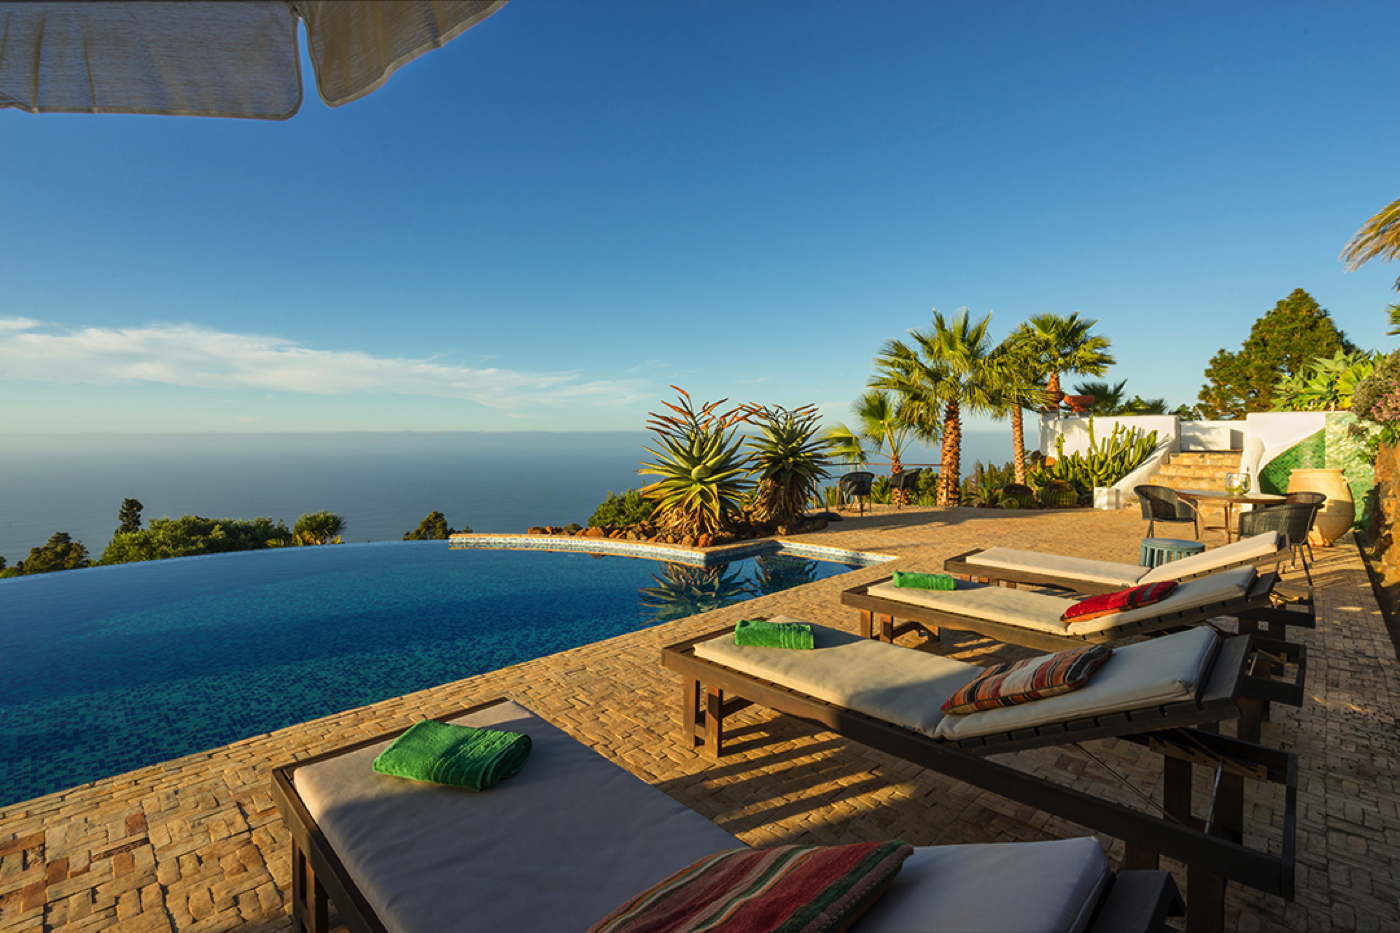 Ferienvilla mit Pool auf La Palma mieten - DOMIZILE REISEN